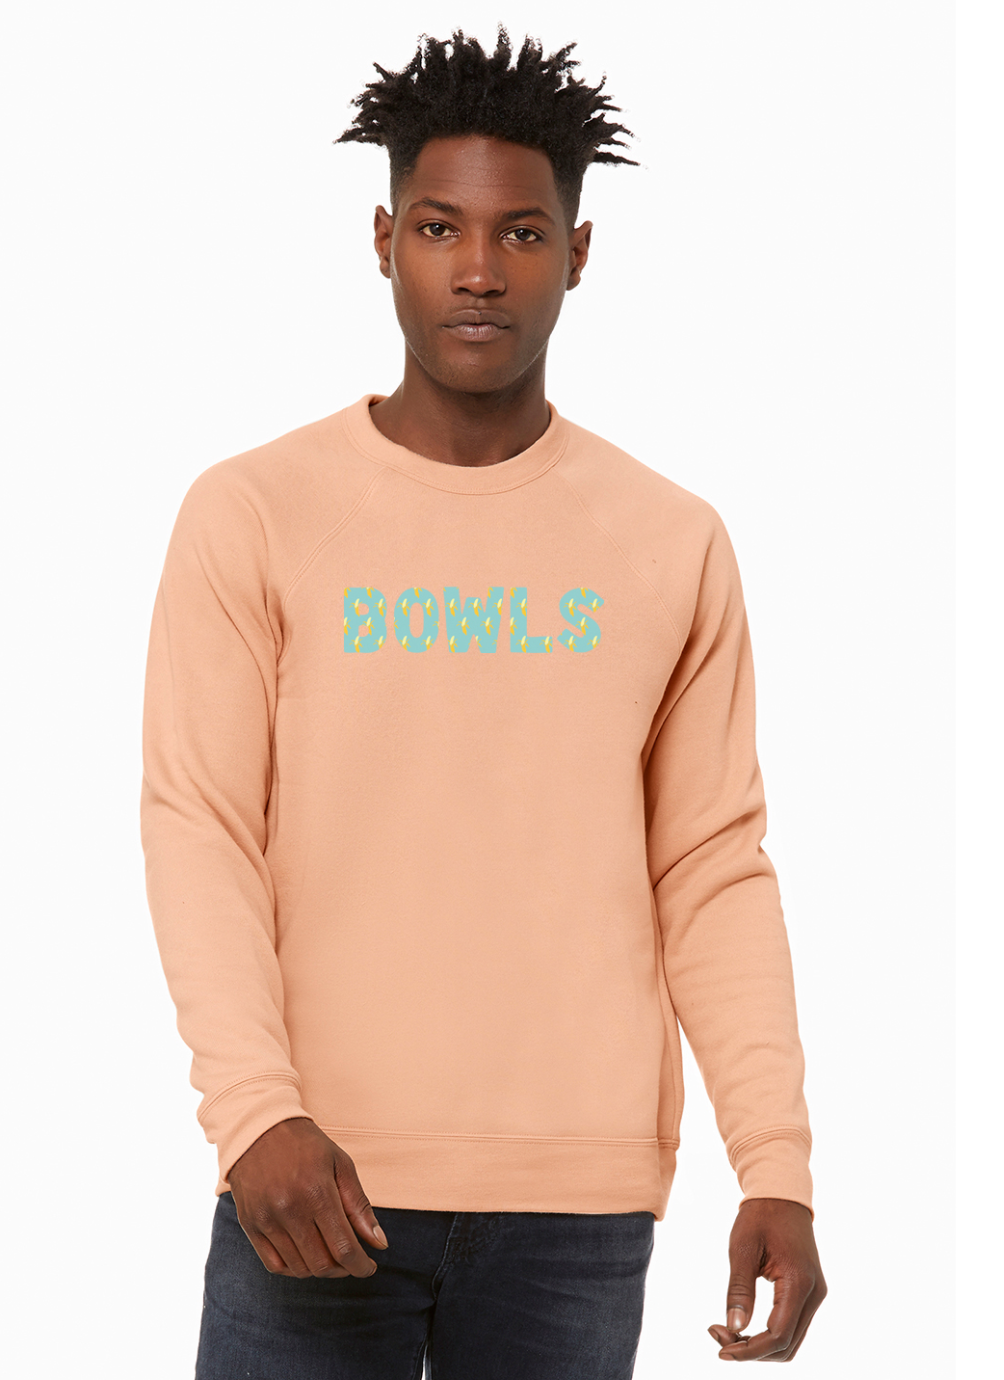 BOWLS Sweatshirt - blendersandbowls